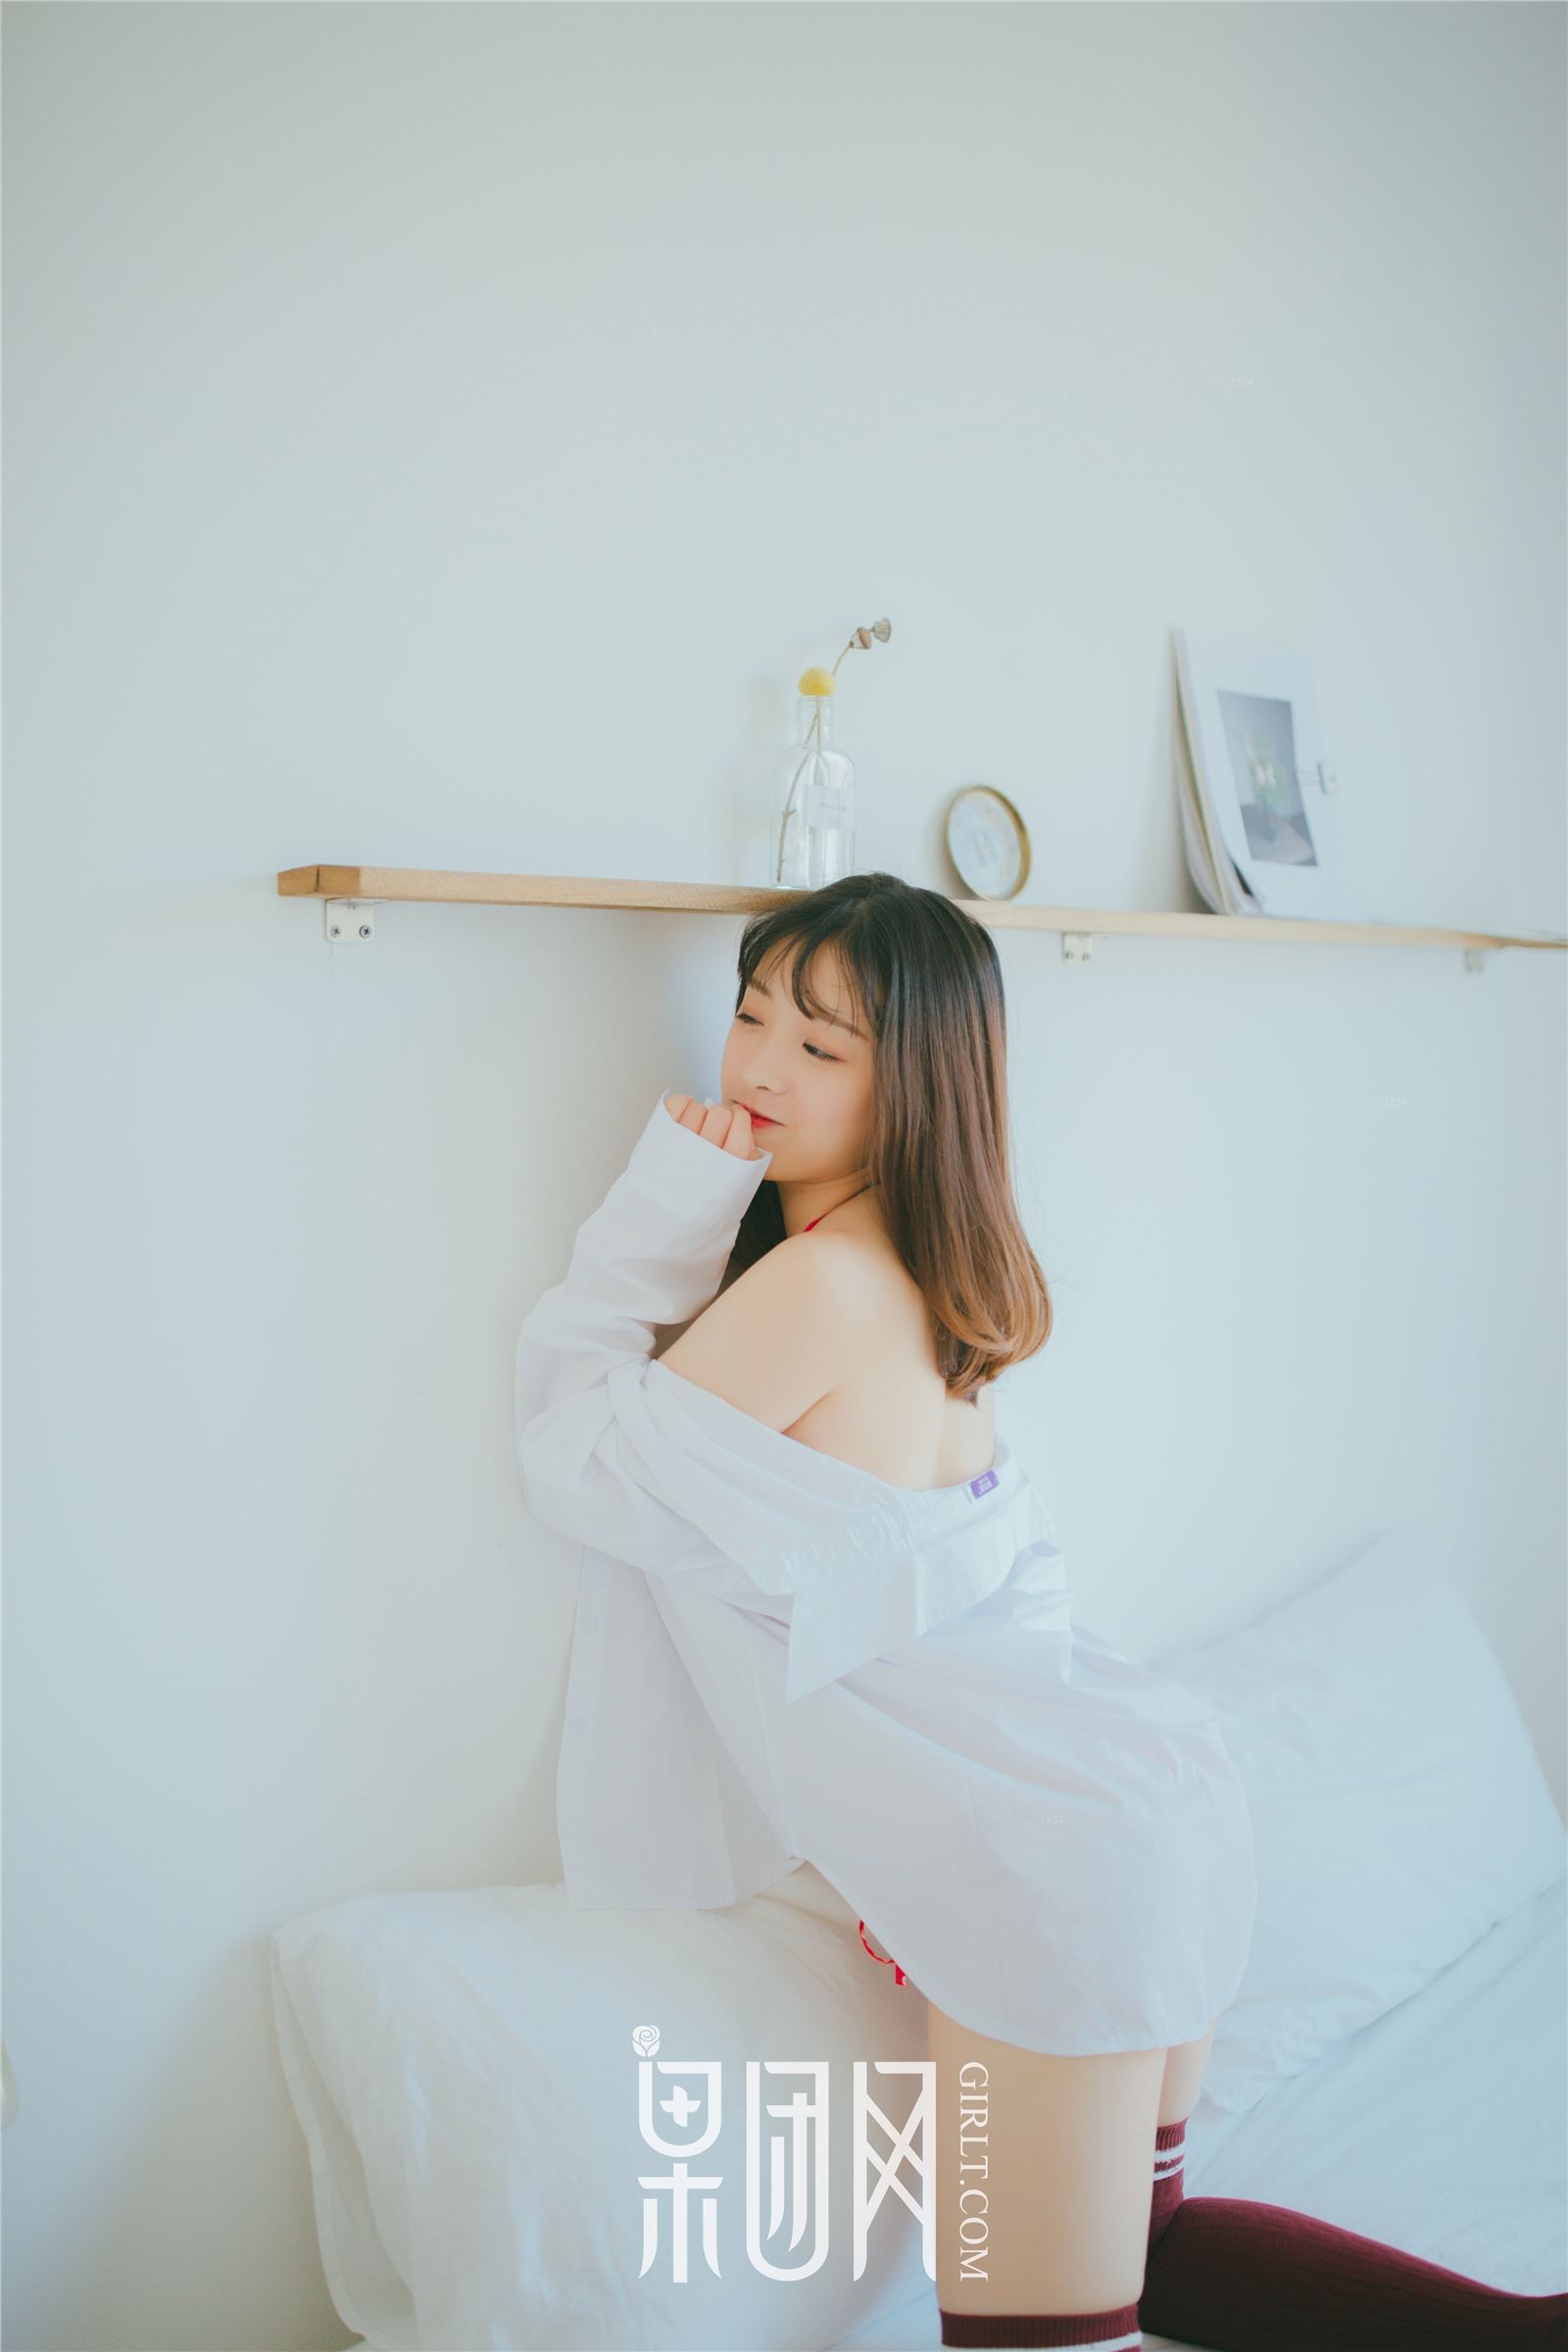 [Girlt fruit group website] March 18, 2018 Jixin kumagawa no.030 strawberry girl's sweet daily life